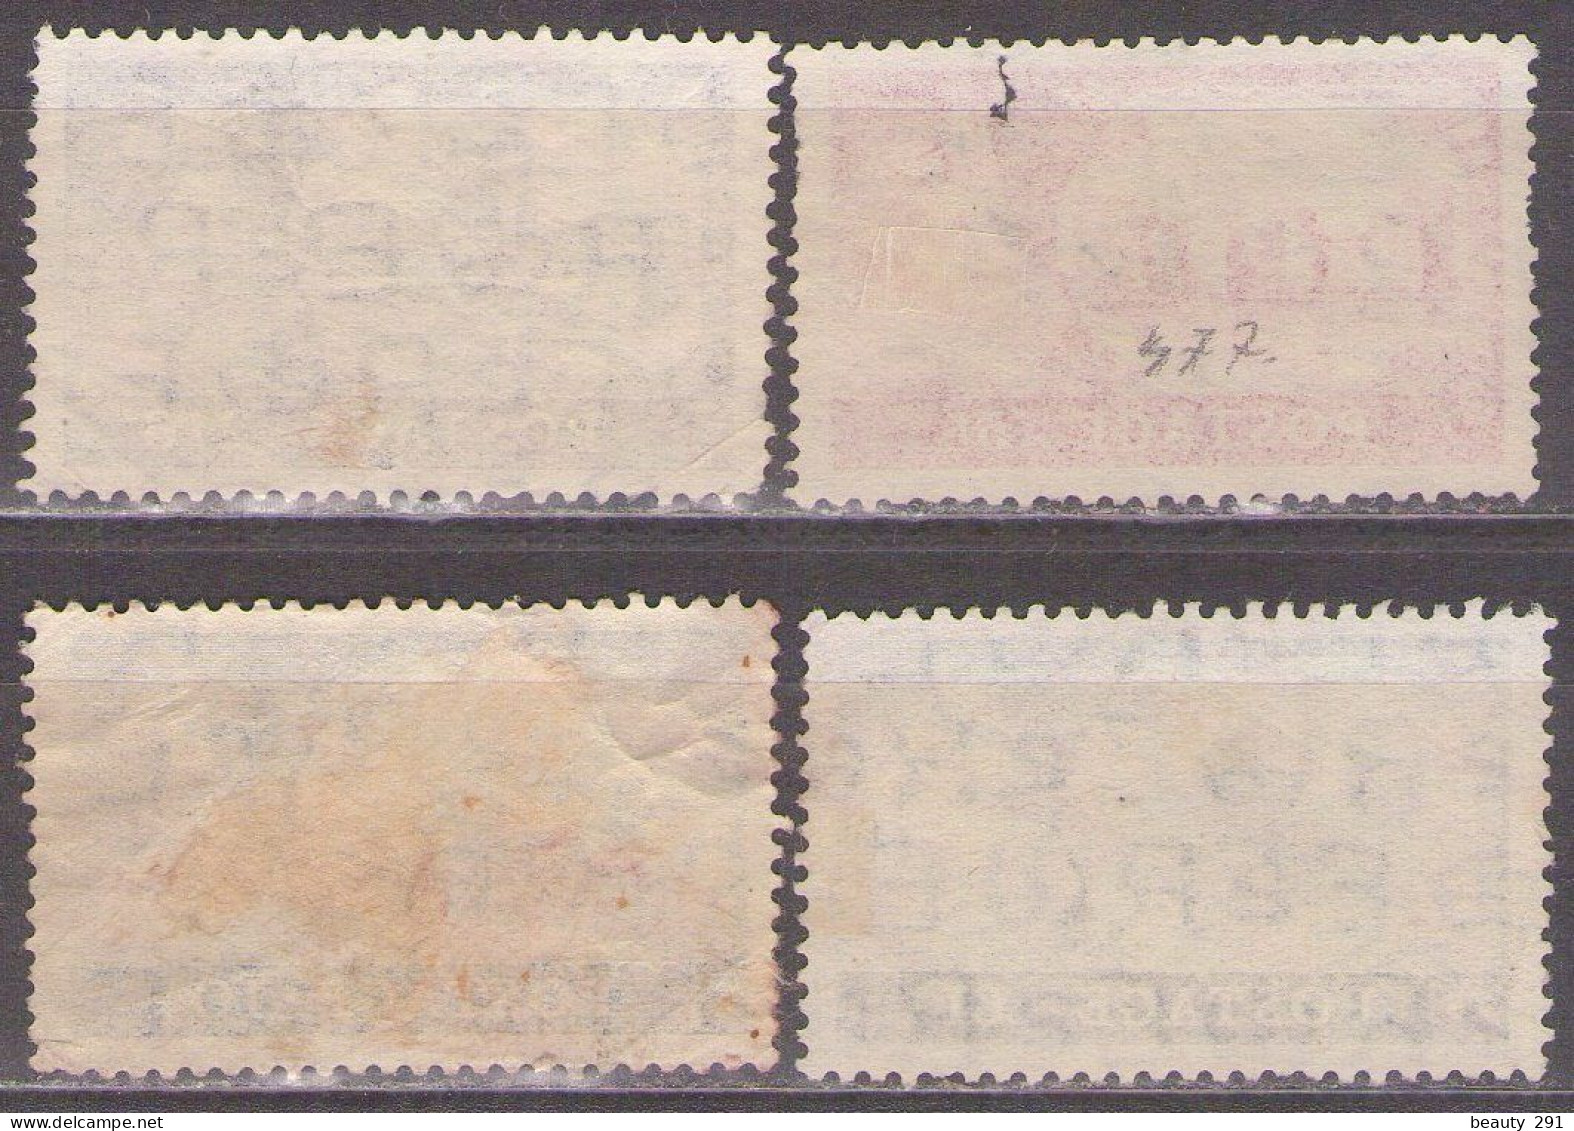 Great Britain 1955 CASTLES QUEEN ELIZABETH II  Used - Used Stamps